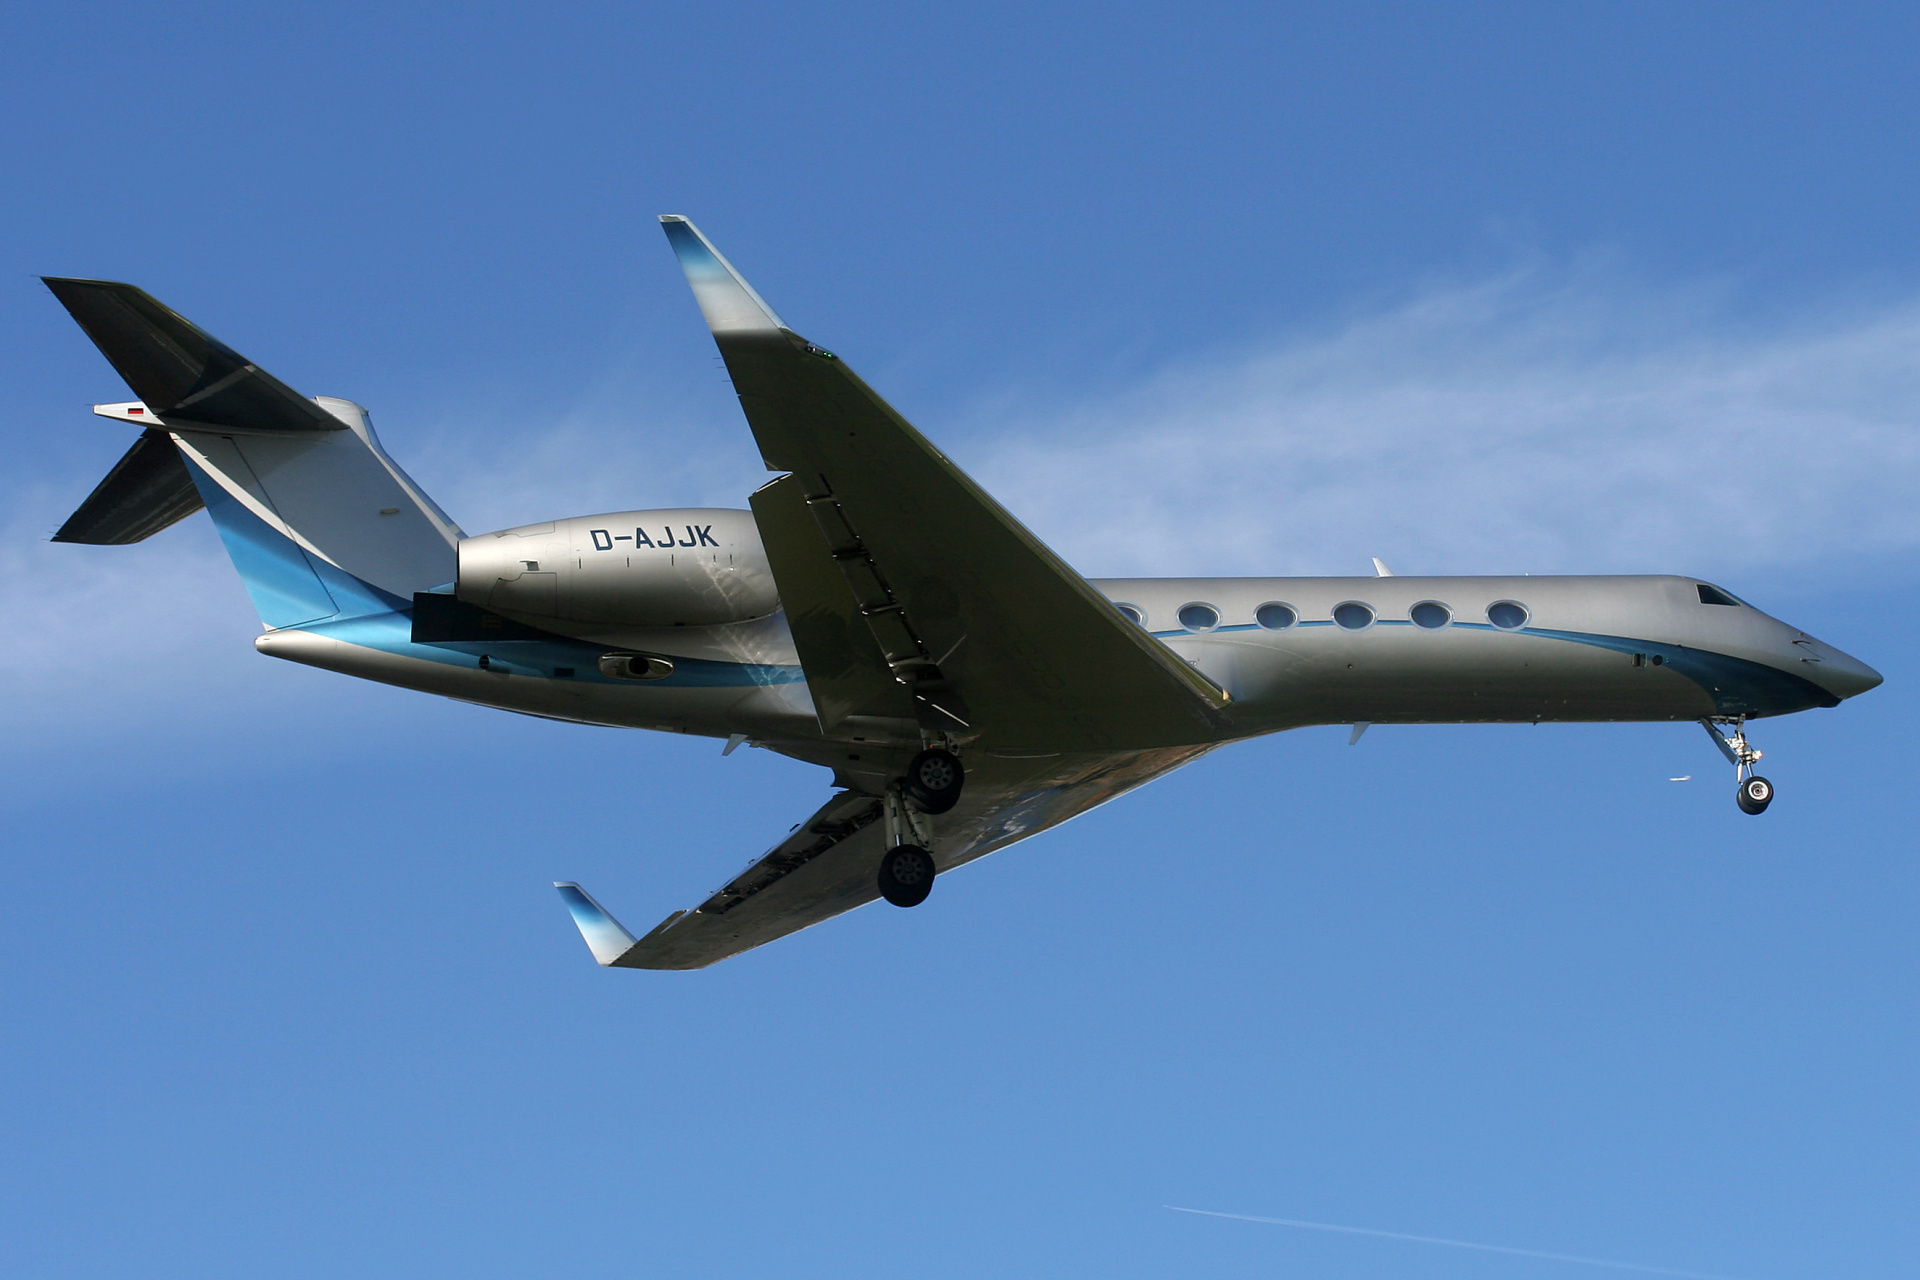 D-AJJK, Windrose Air Jetcharter (Aircraft » EPWA Spotting » Gulfstream V » G550 (GV-SP))